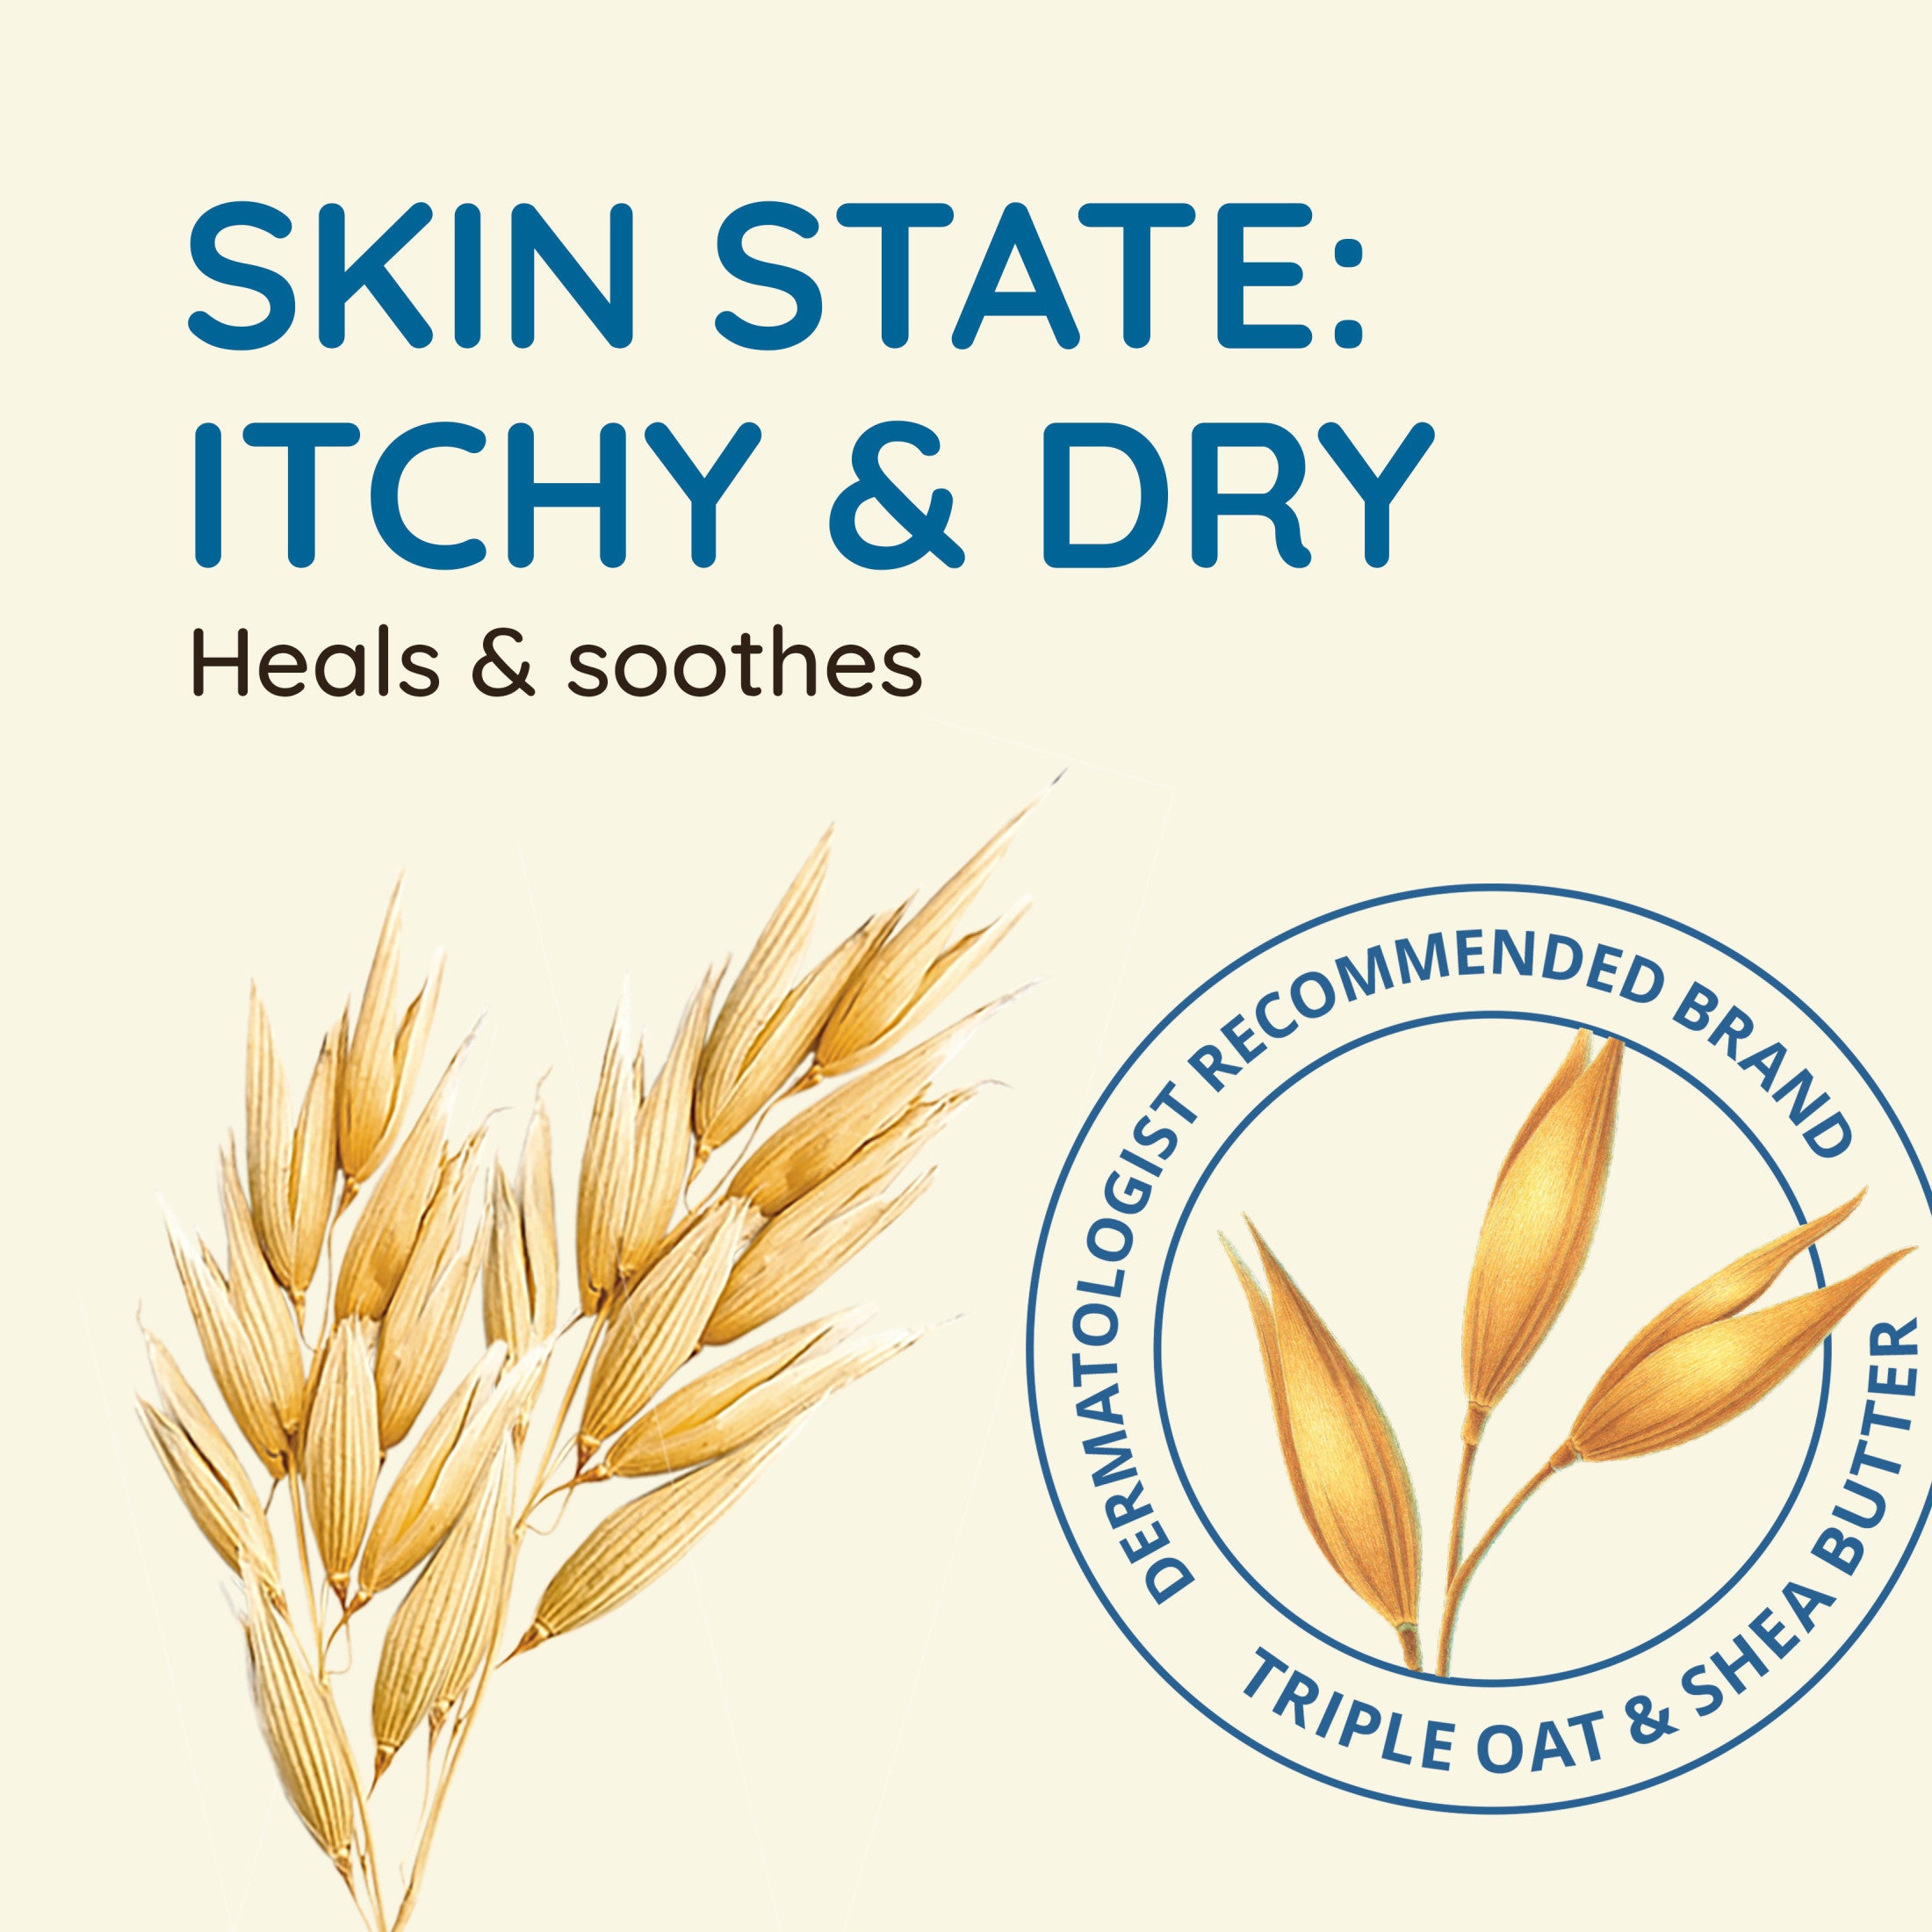 Aveeno Skin Relief Fragrance-Free Body Wash, Sensitive Skin, 18 fl. oz | MTTS356